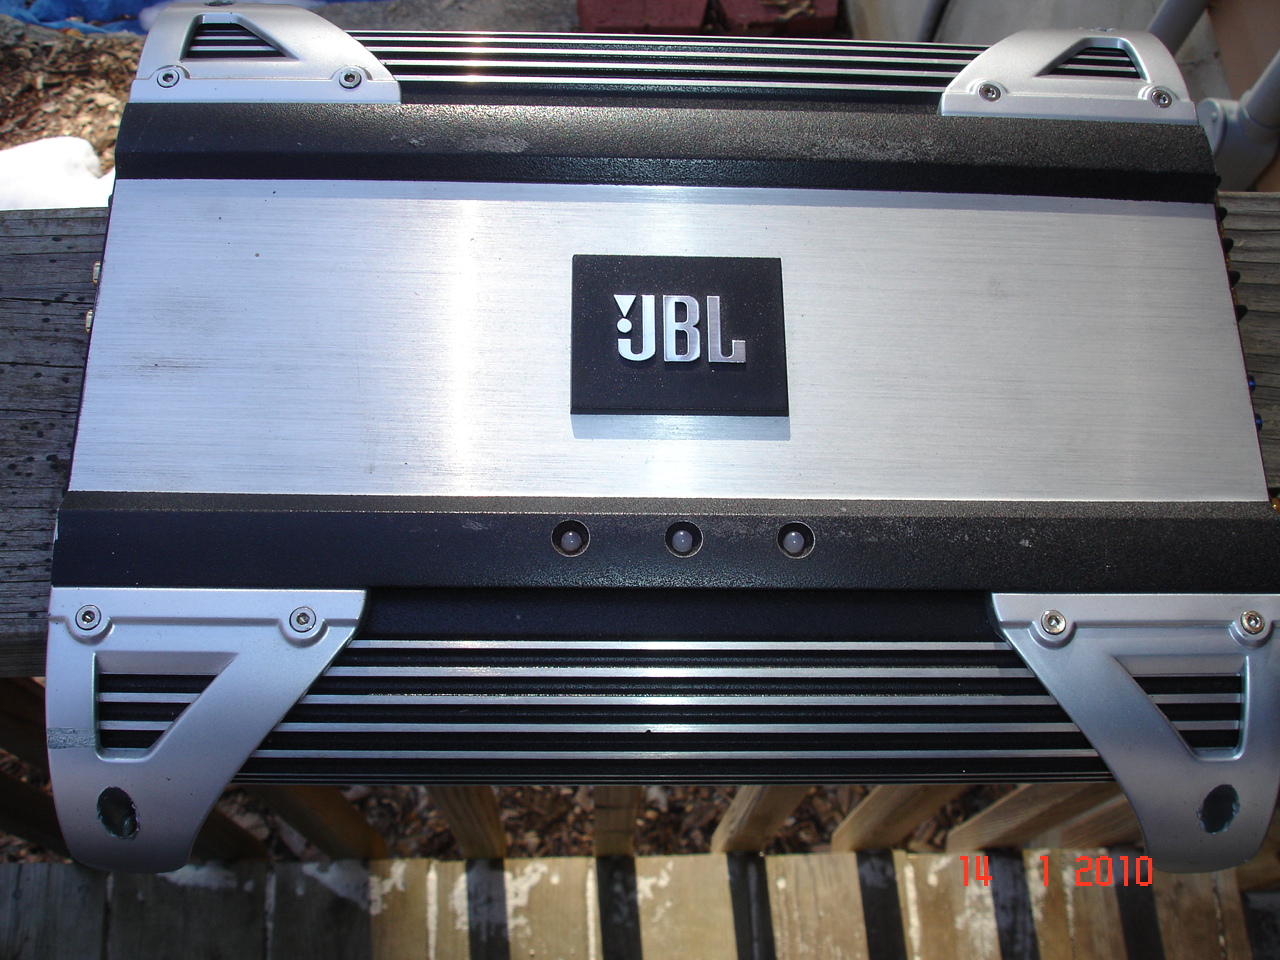 JBL CS300 AMP for sale - CorvetteForum - Chevrolet Corvette Forum Discussion